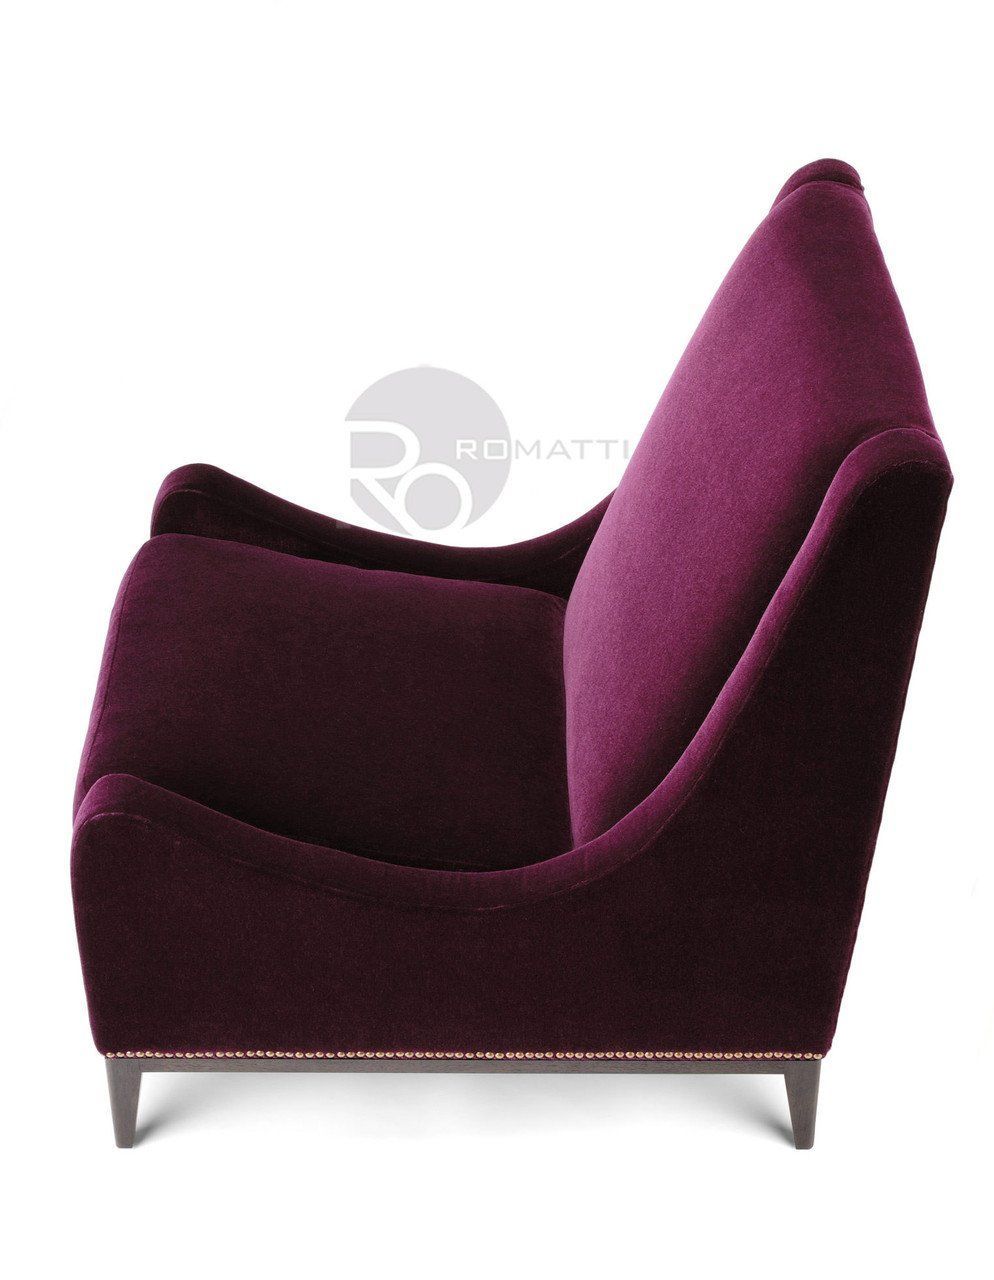 SLOOP chair by Romatti